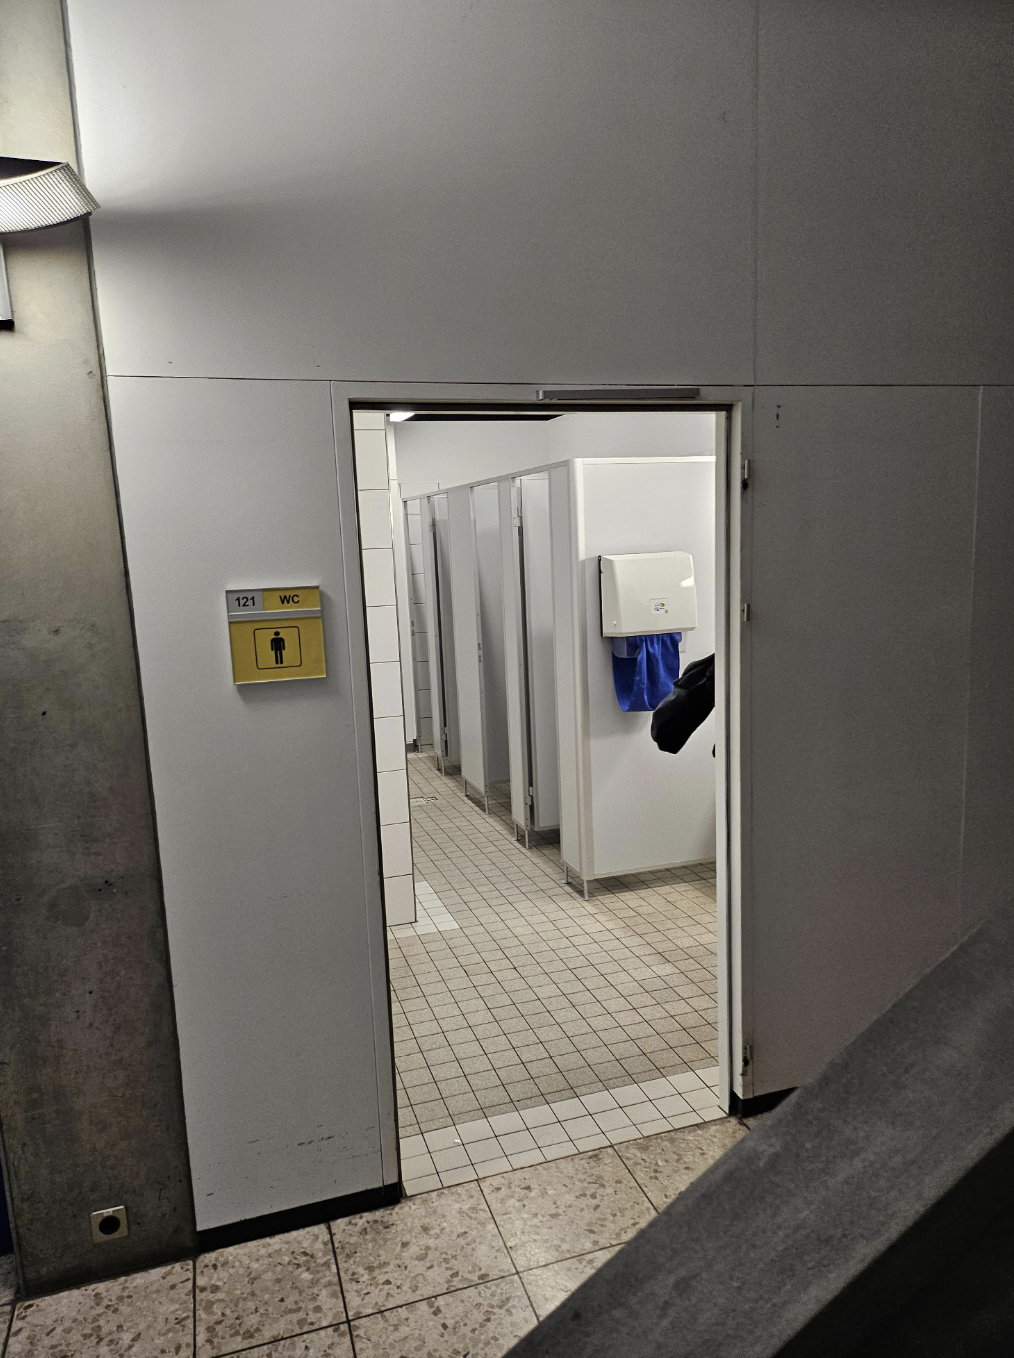 Public restroom interior with open stall doors and visible toilet paper dispenser; individual&#x27;s foot seen under one door